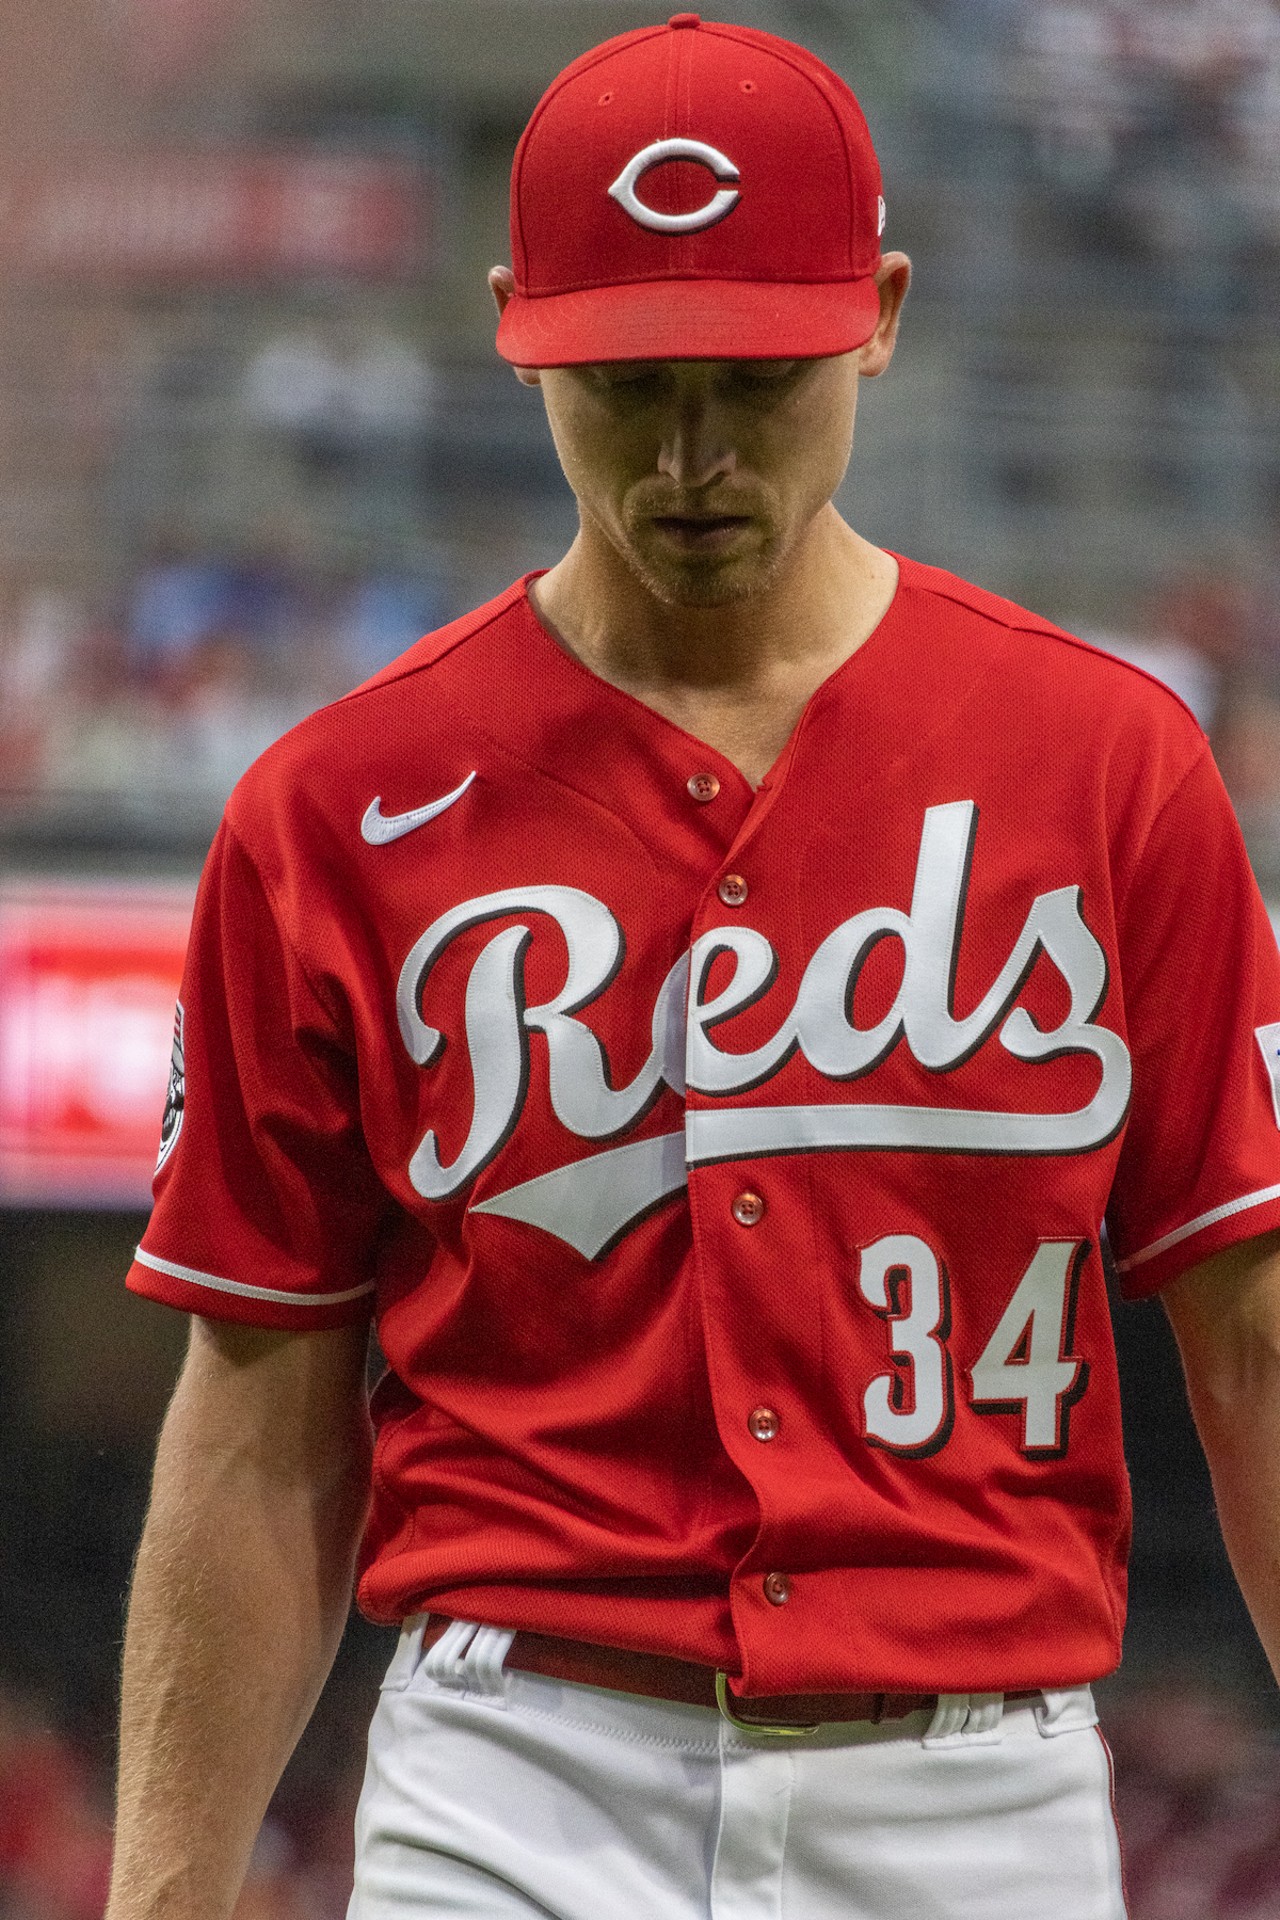 Cincinnati Reds player Luke Weaver during their game against the Los Angeles Dodgers on June 6.